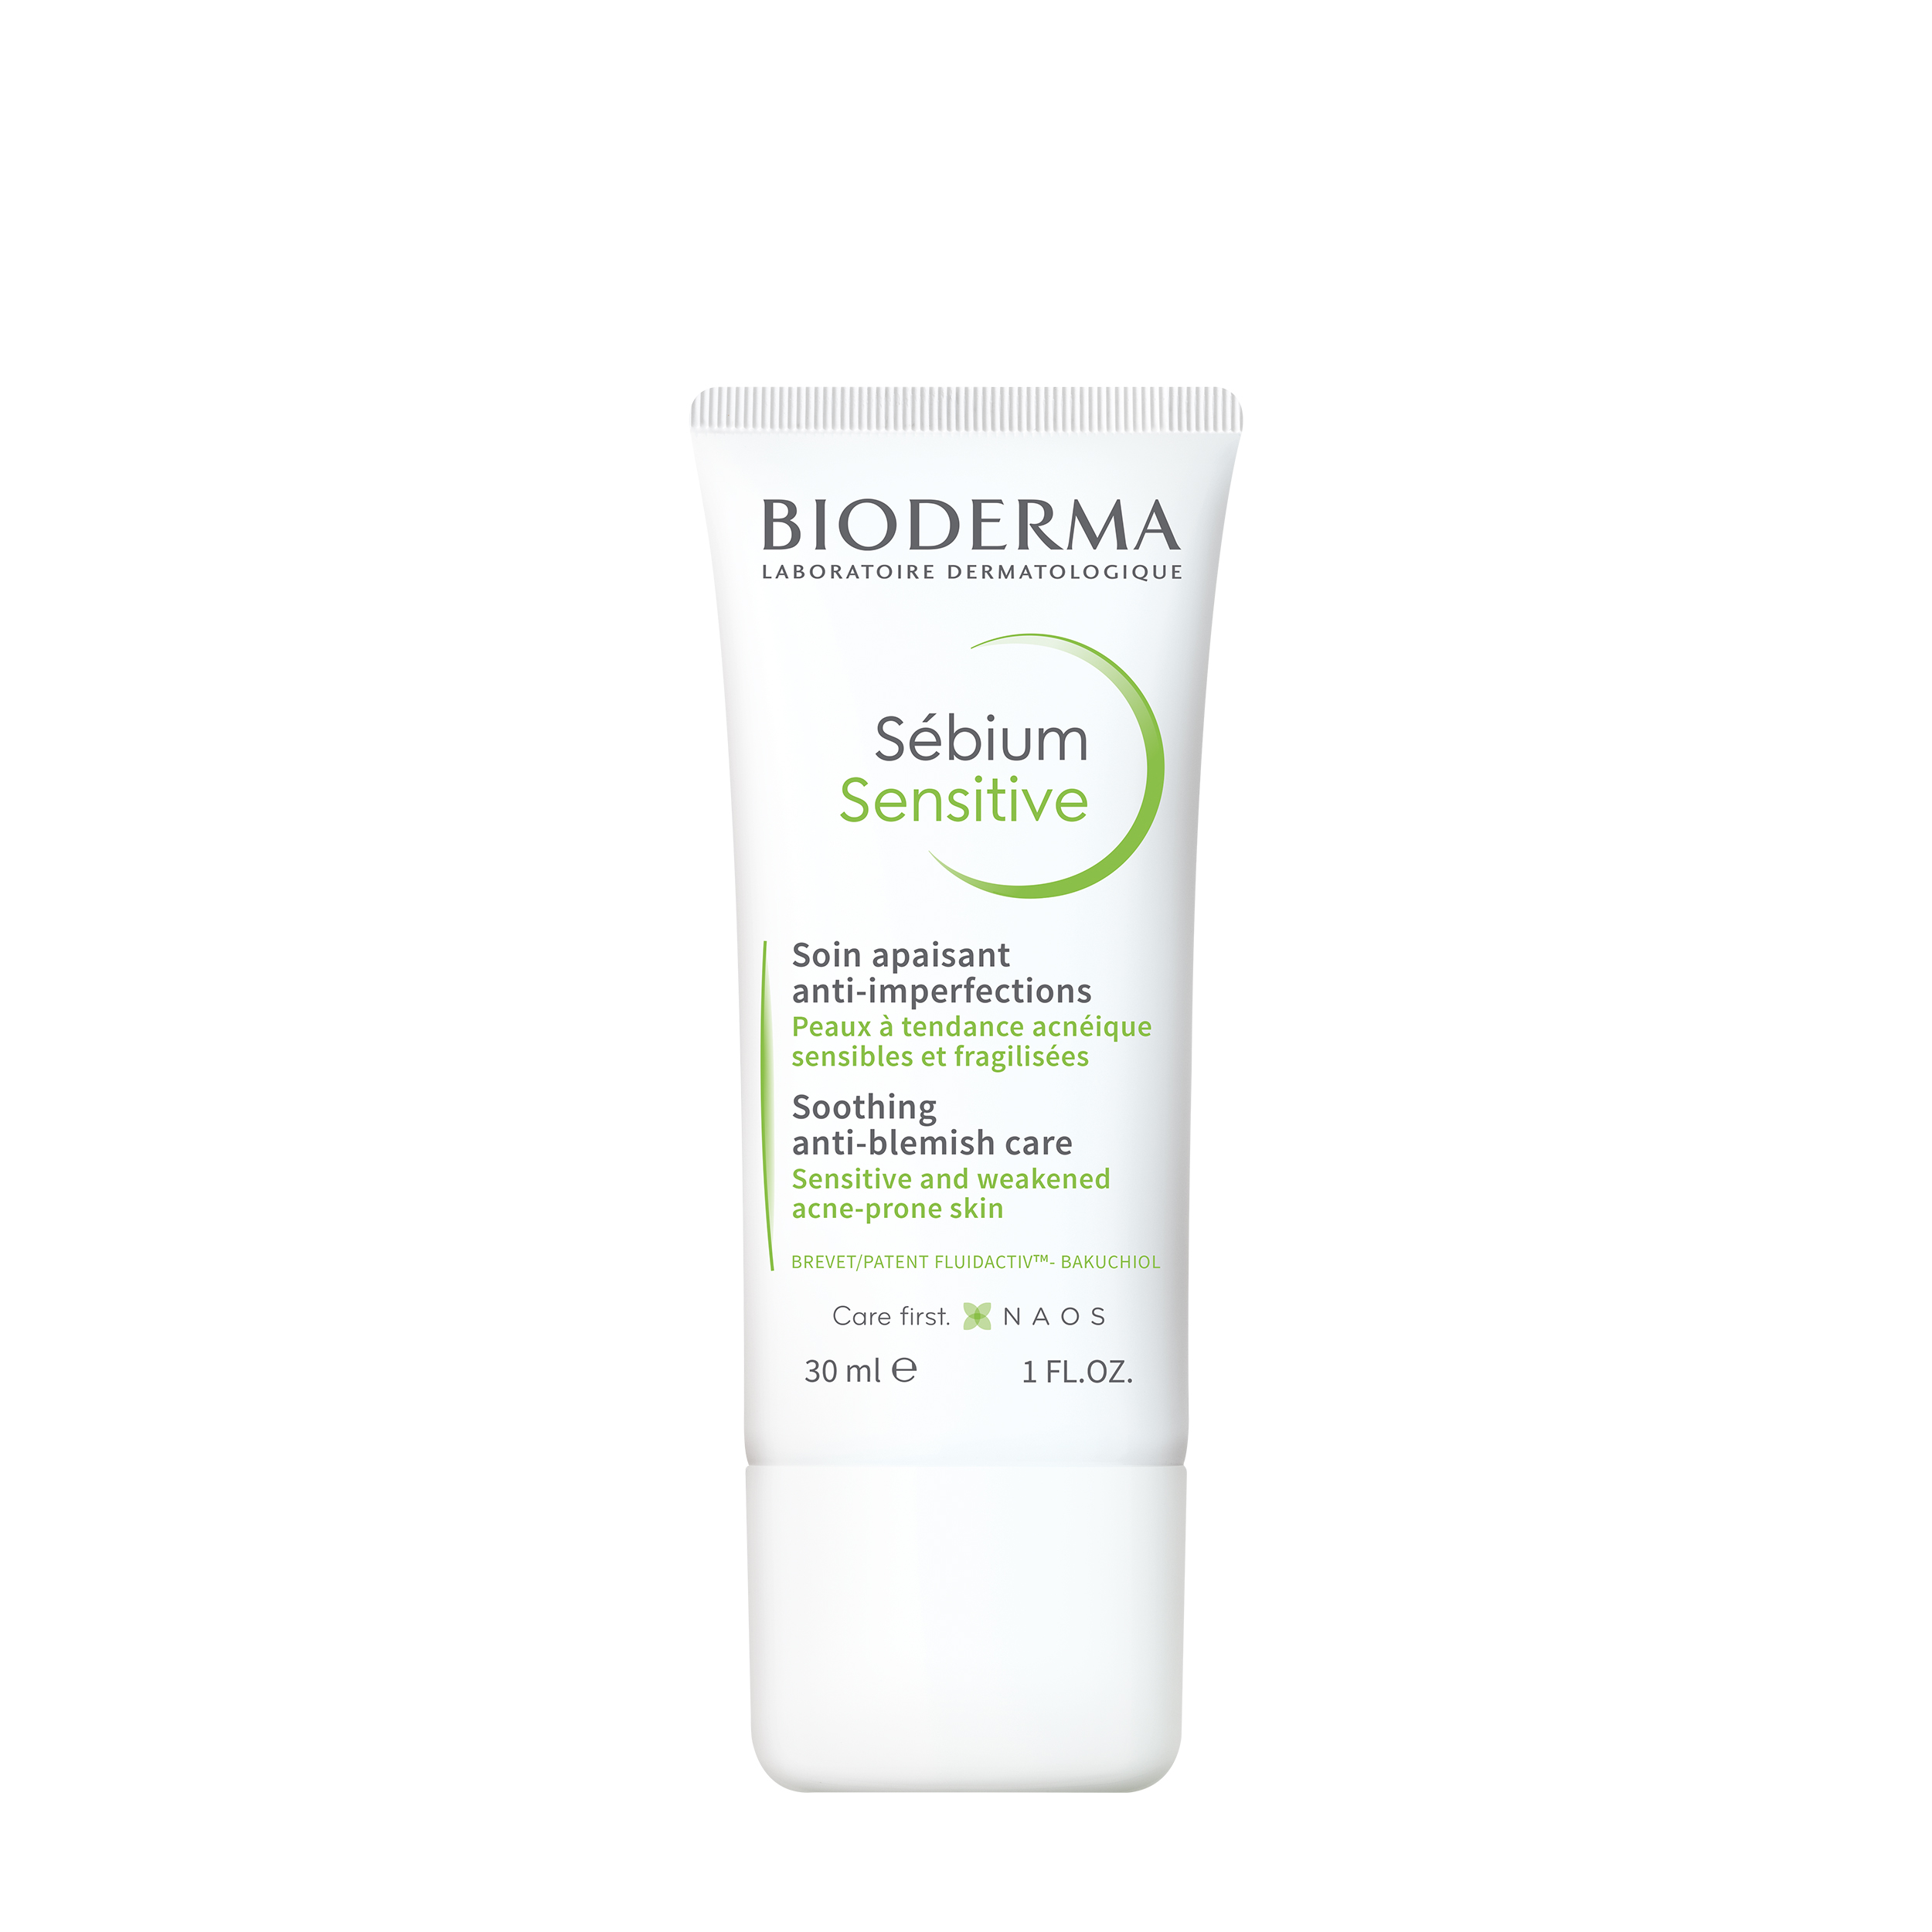 BIODERMA BIODERMA Крем для чувствительной кожи с акне Sebium Sensitive 30 мл от Foambox